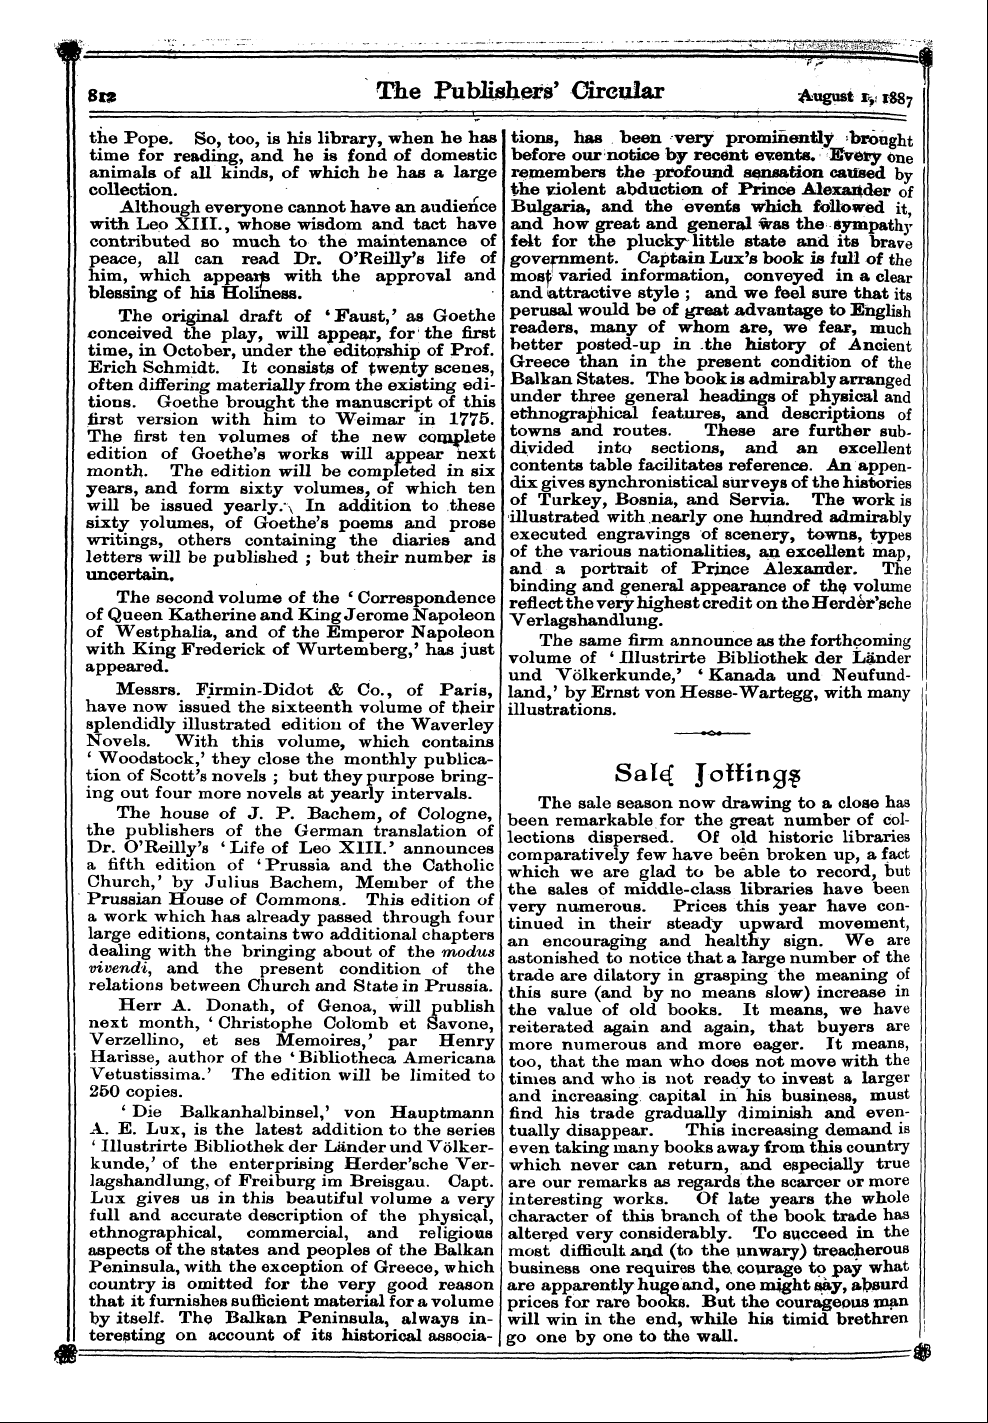 Publishers’ Circular (1880-1890): jS F Y, 1st edition - Sal^ Jotfingf